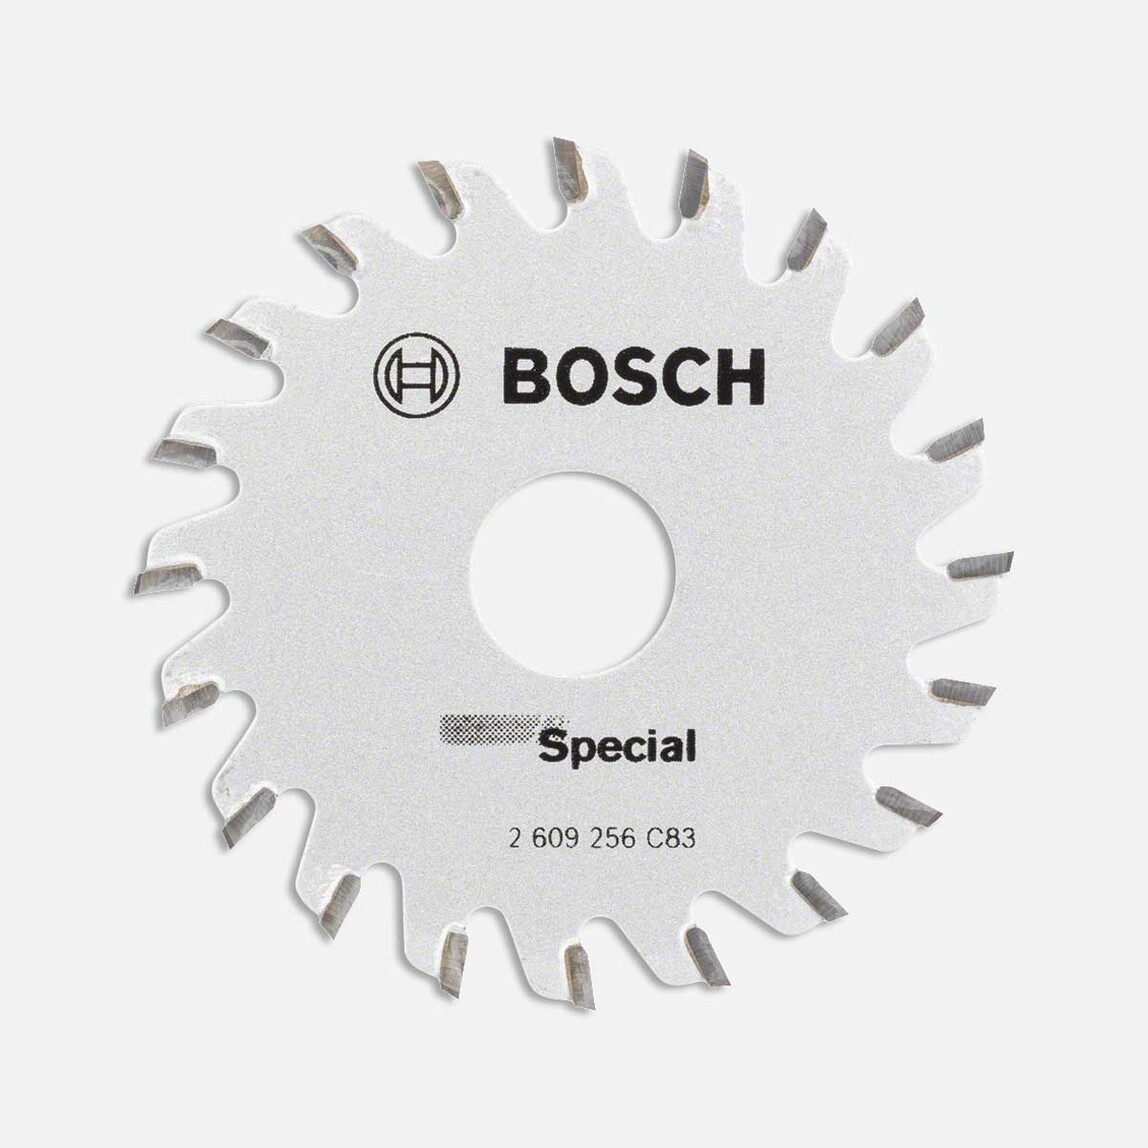    Bosch Daire Testere Bıçağı Pks16,  65X15 mm  20Diş  